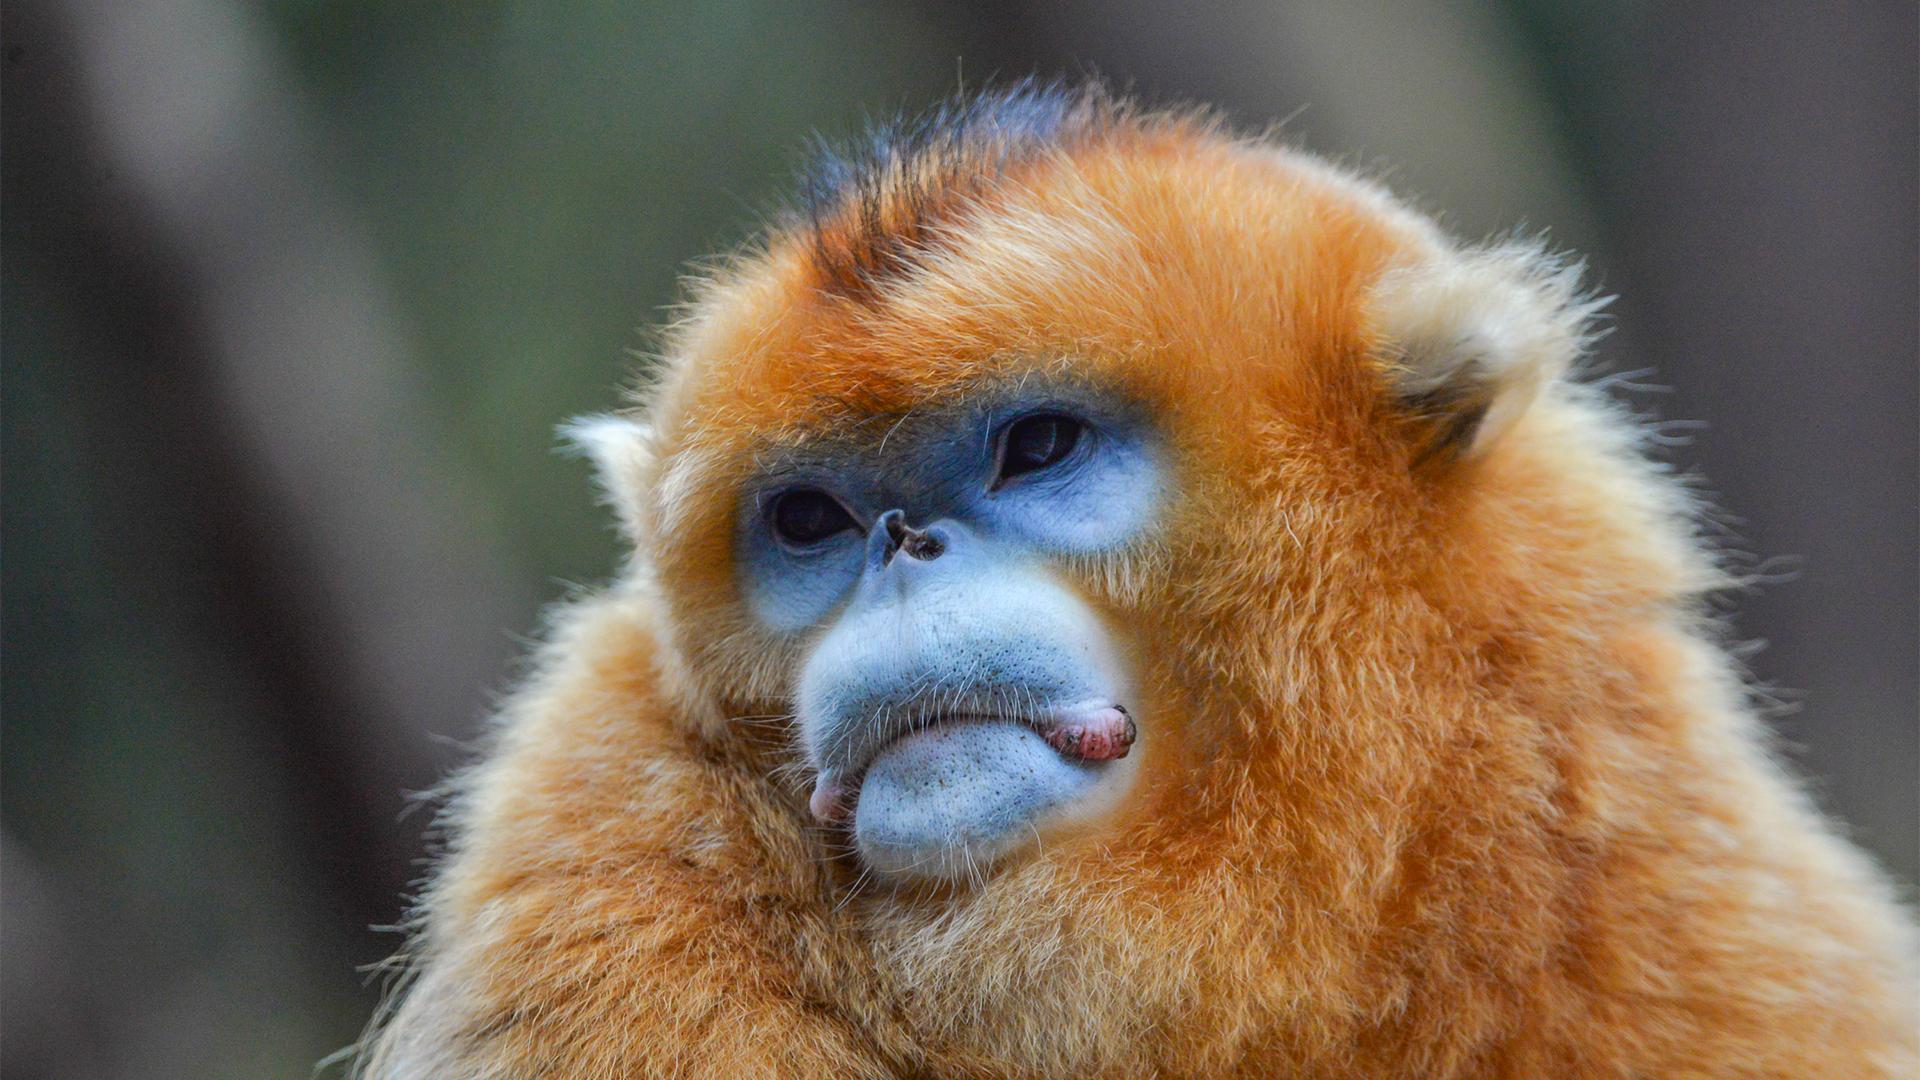 Photograph Endangered Golden Snub-Nosed Monkeys in China’s Nature Reserves